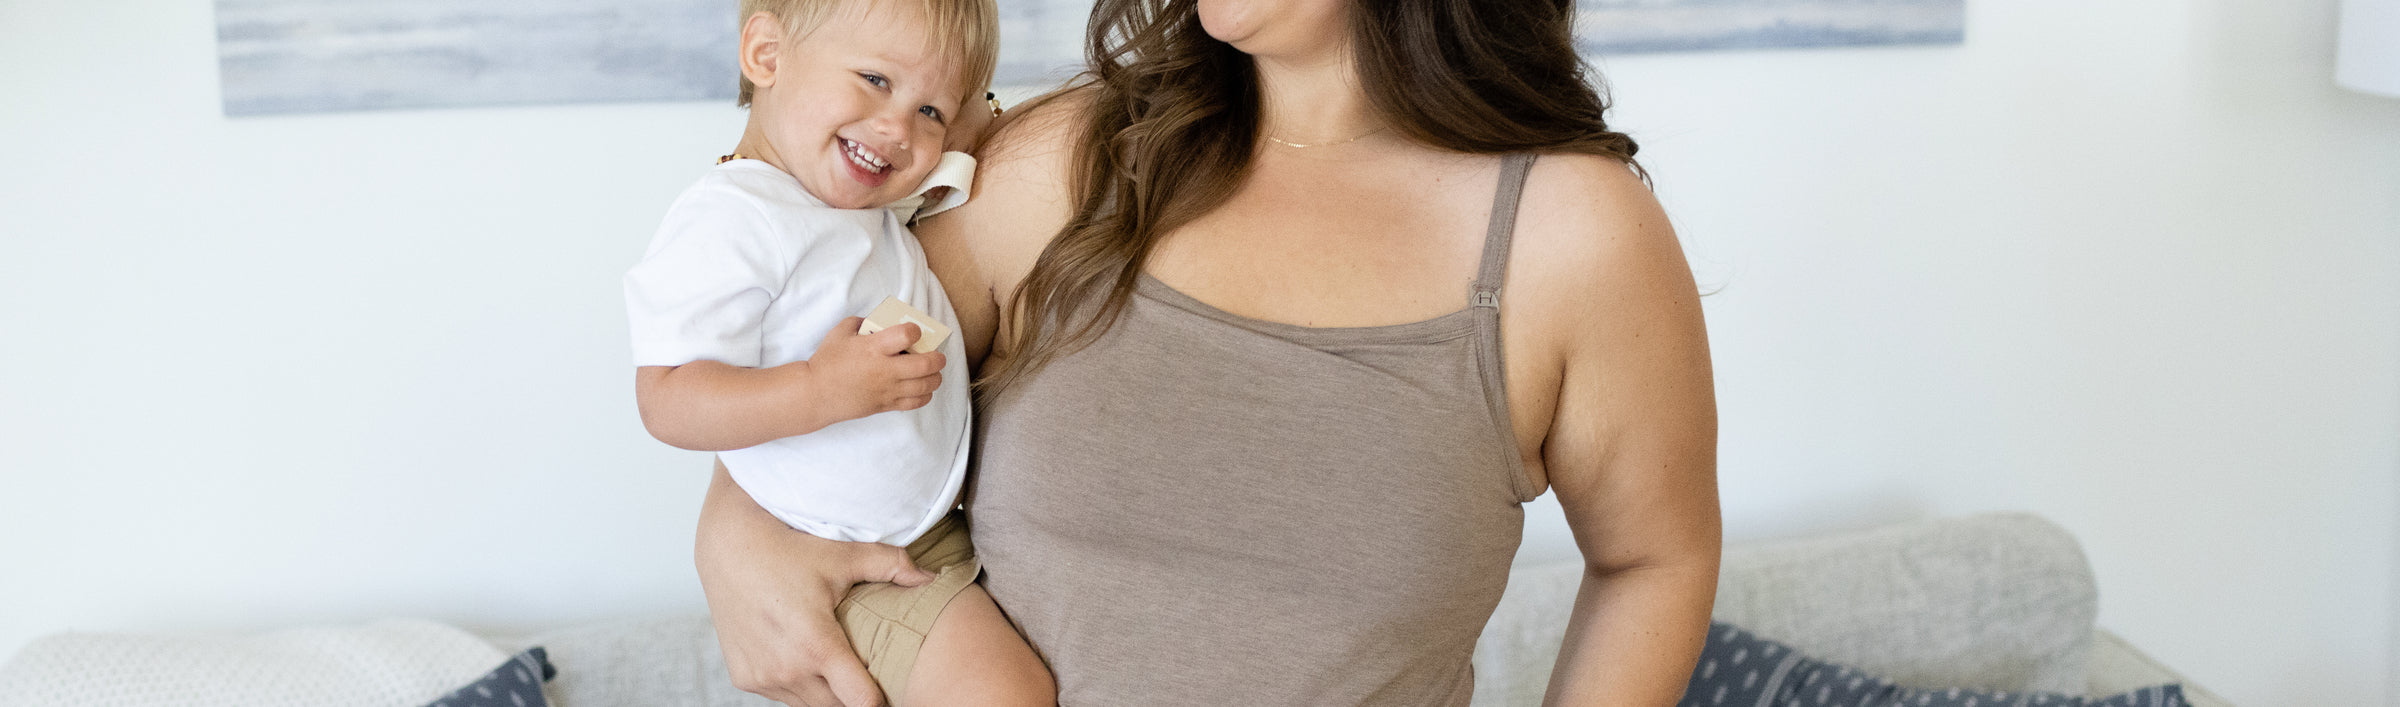 Breastfeeding moms: refresh your wardrobe with cute nursing